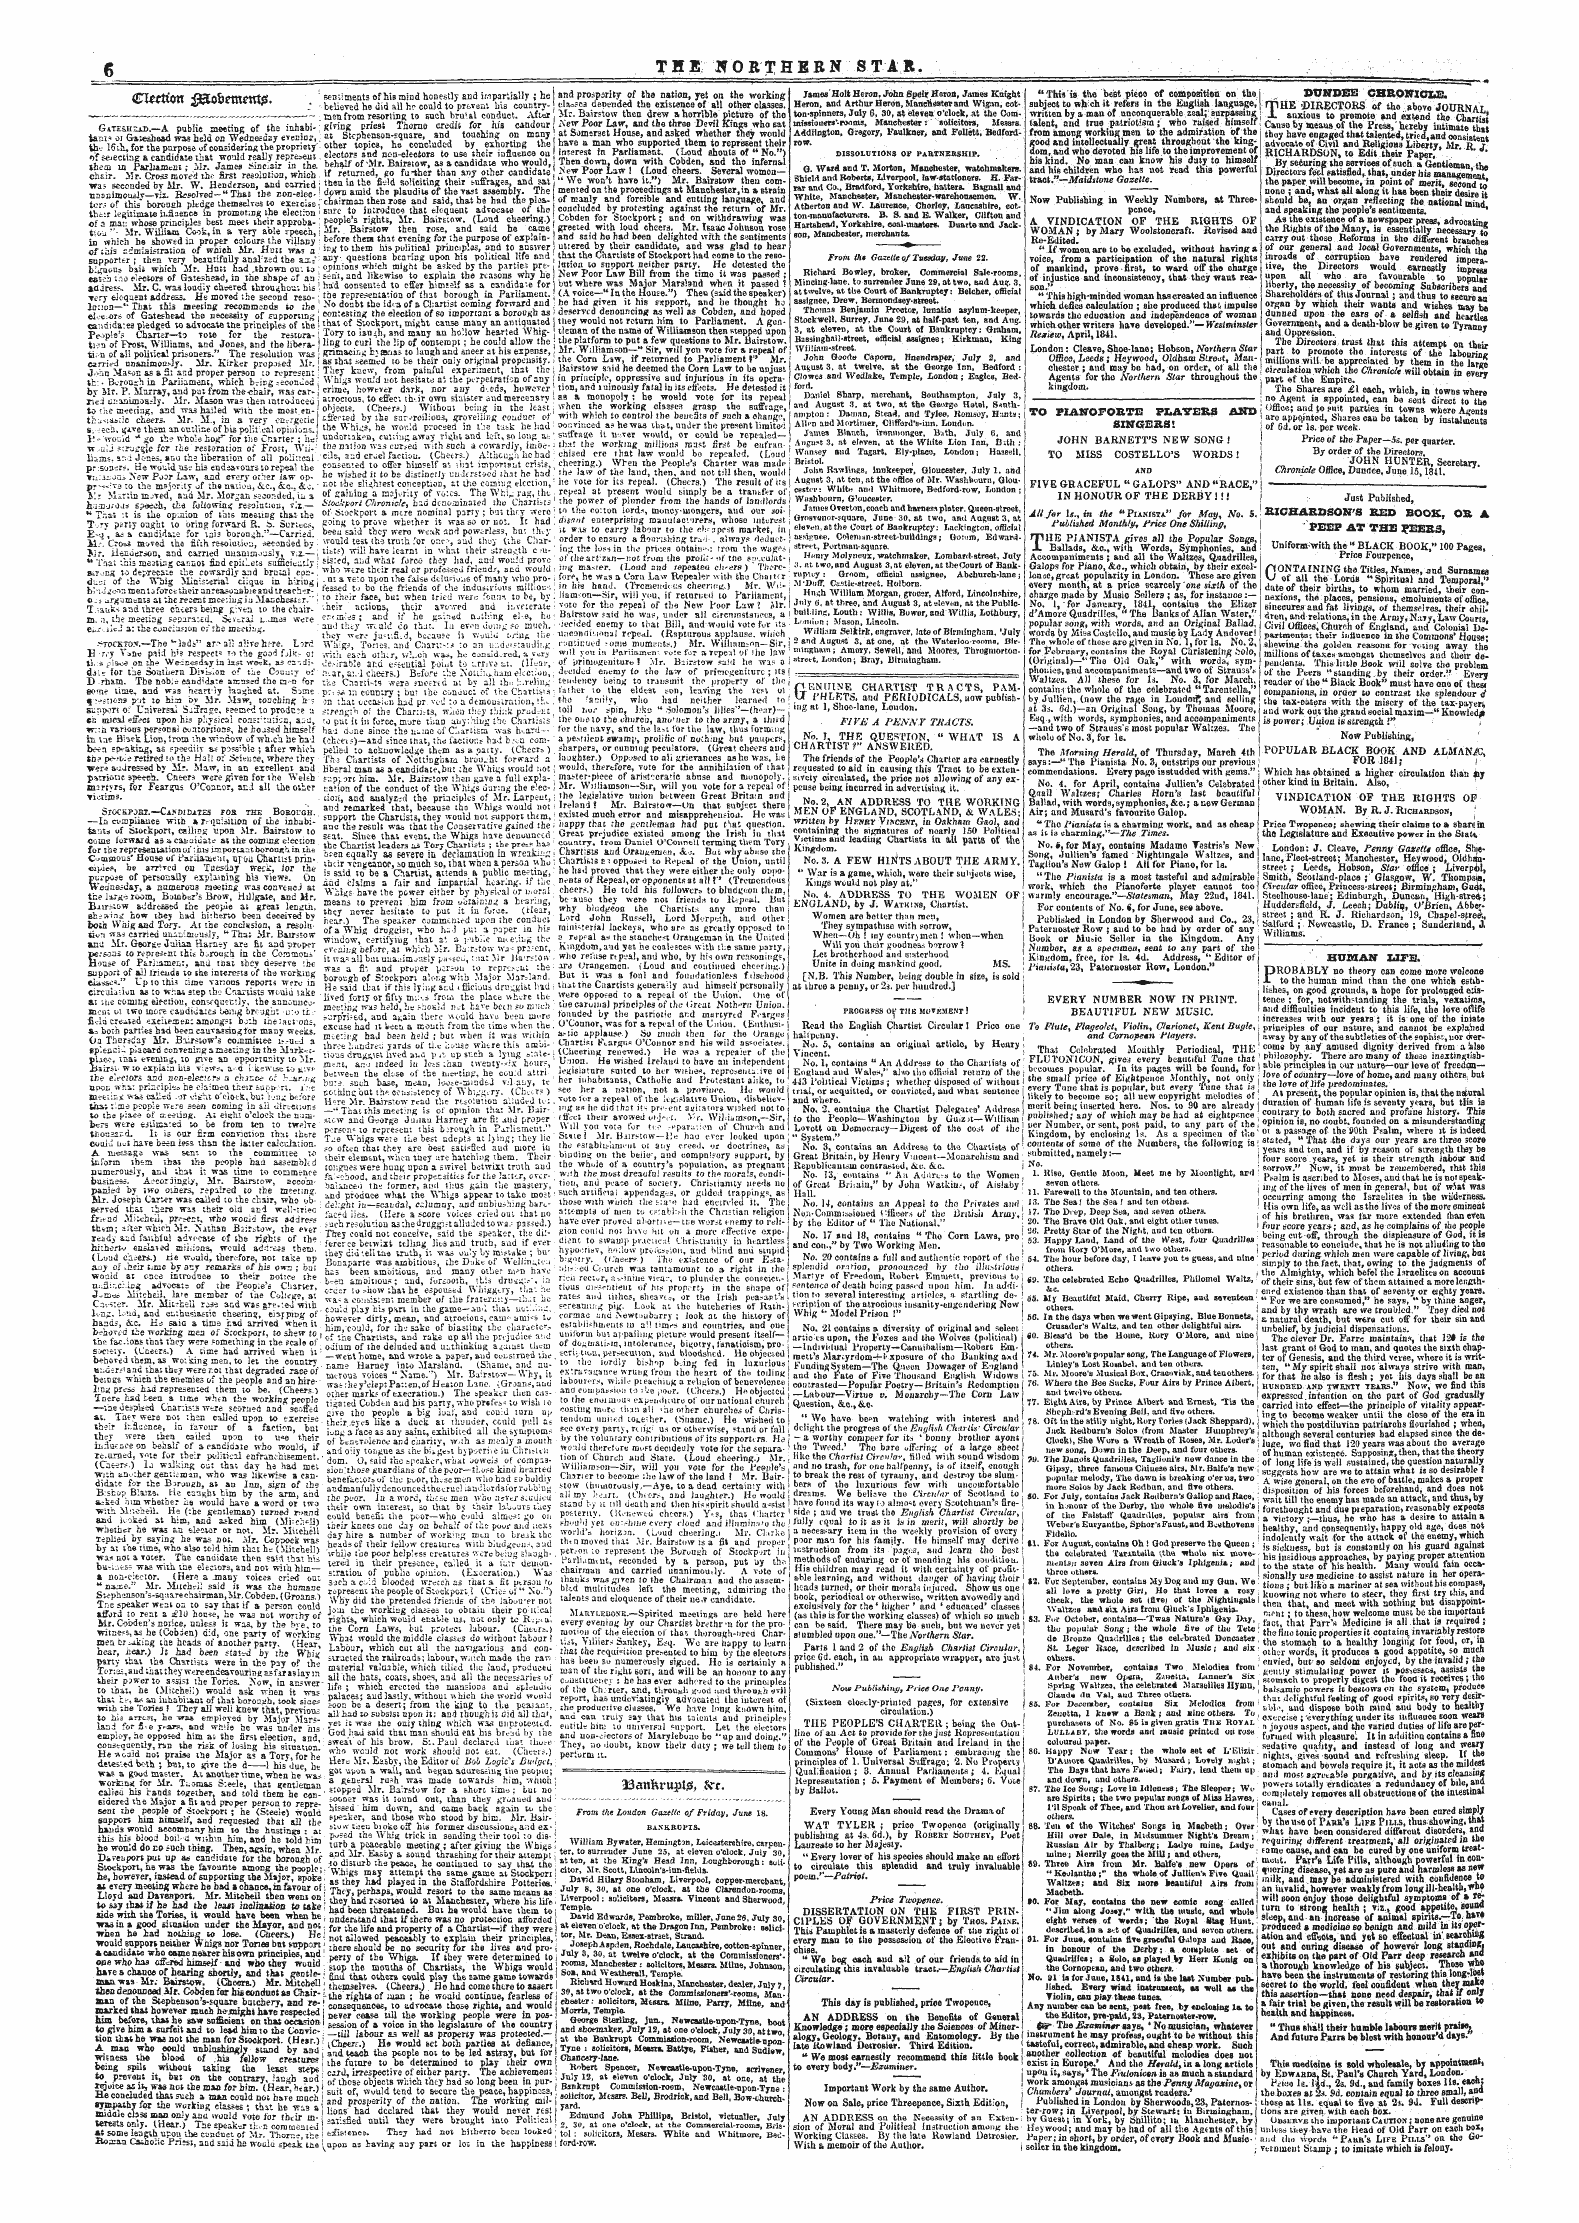 Northern Star (1837-1852): jS F Y, 4th edition: 6